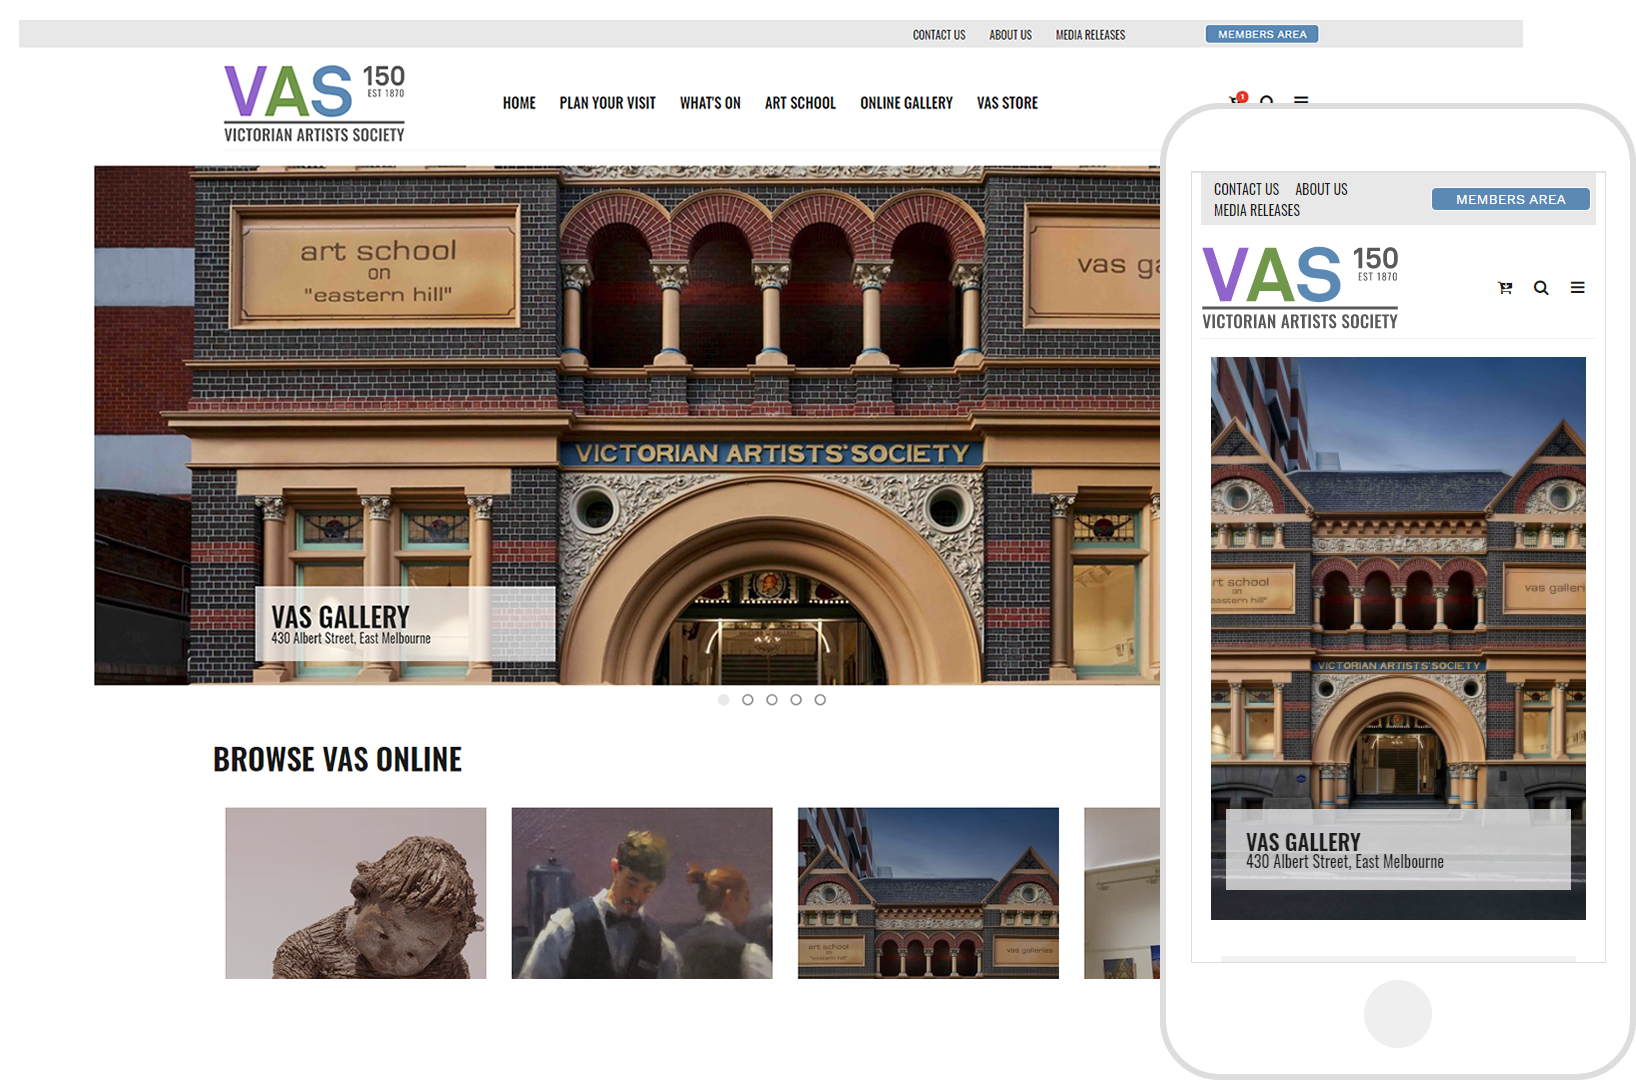 VAS Gallery - The Victorian Artists Society